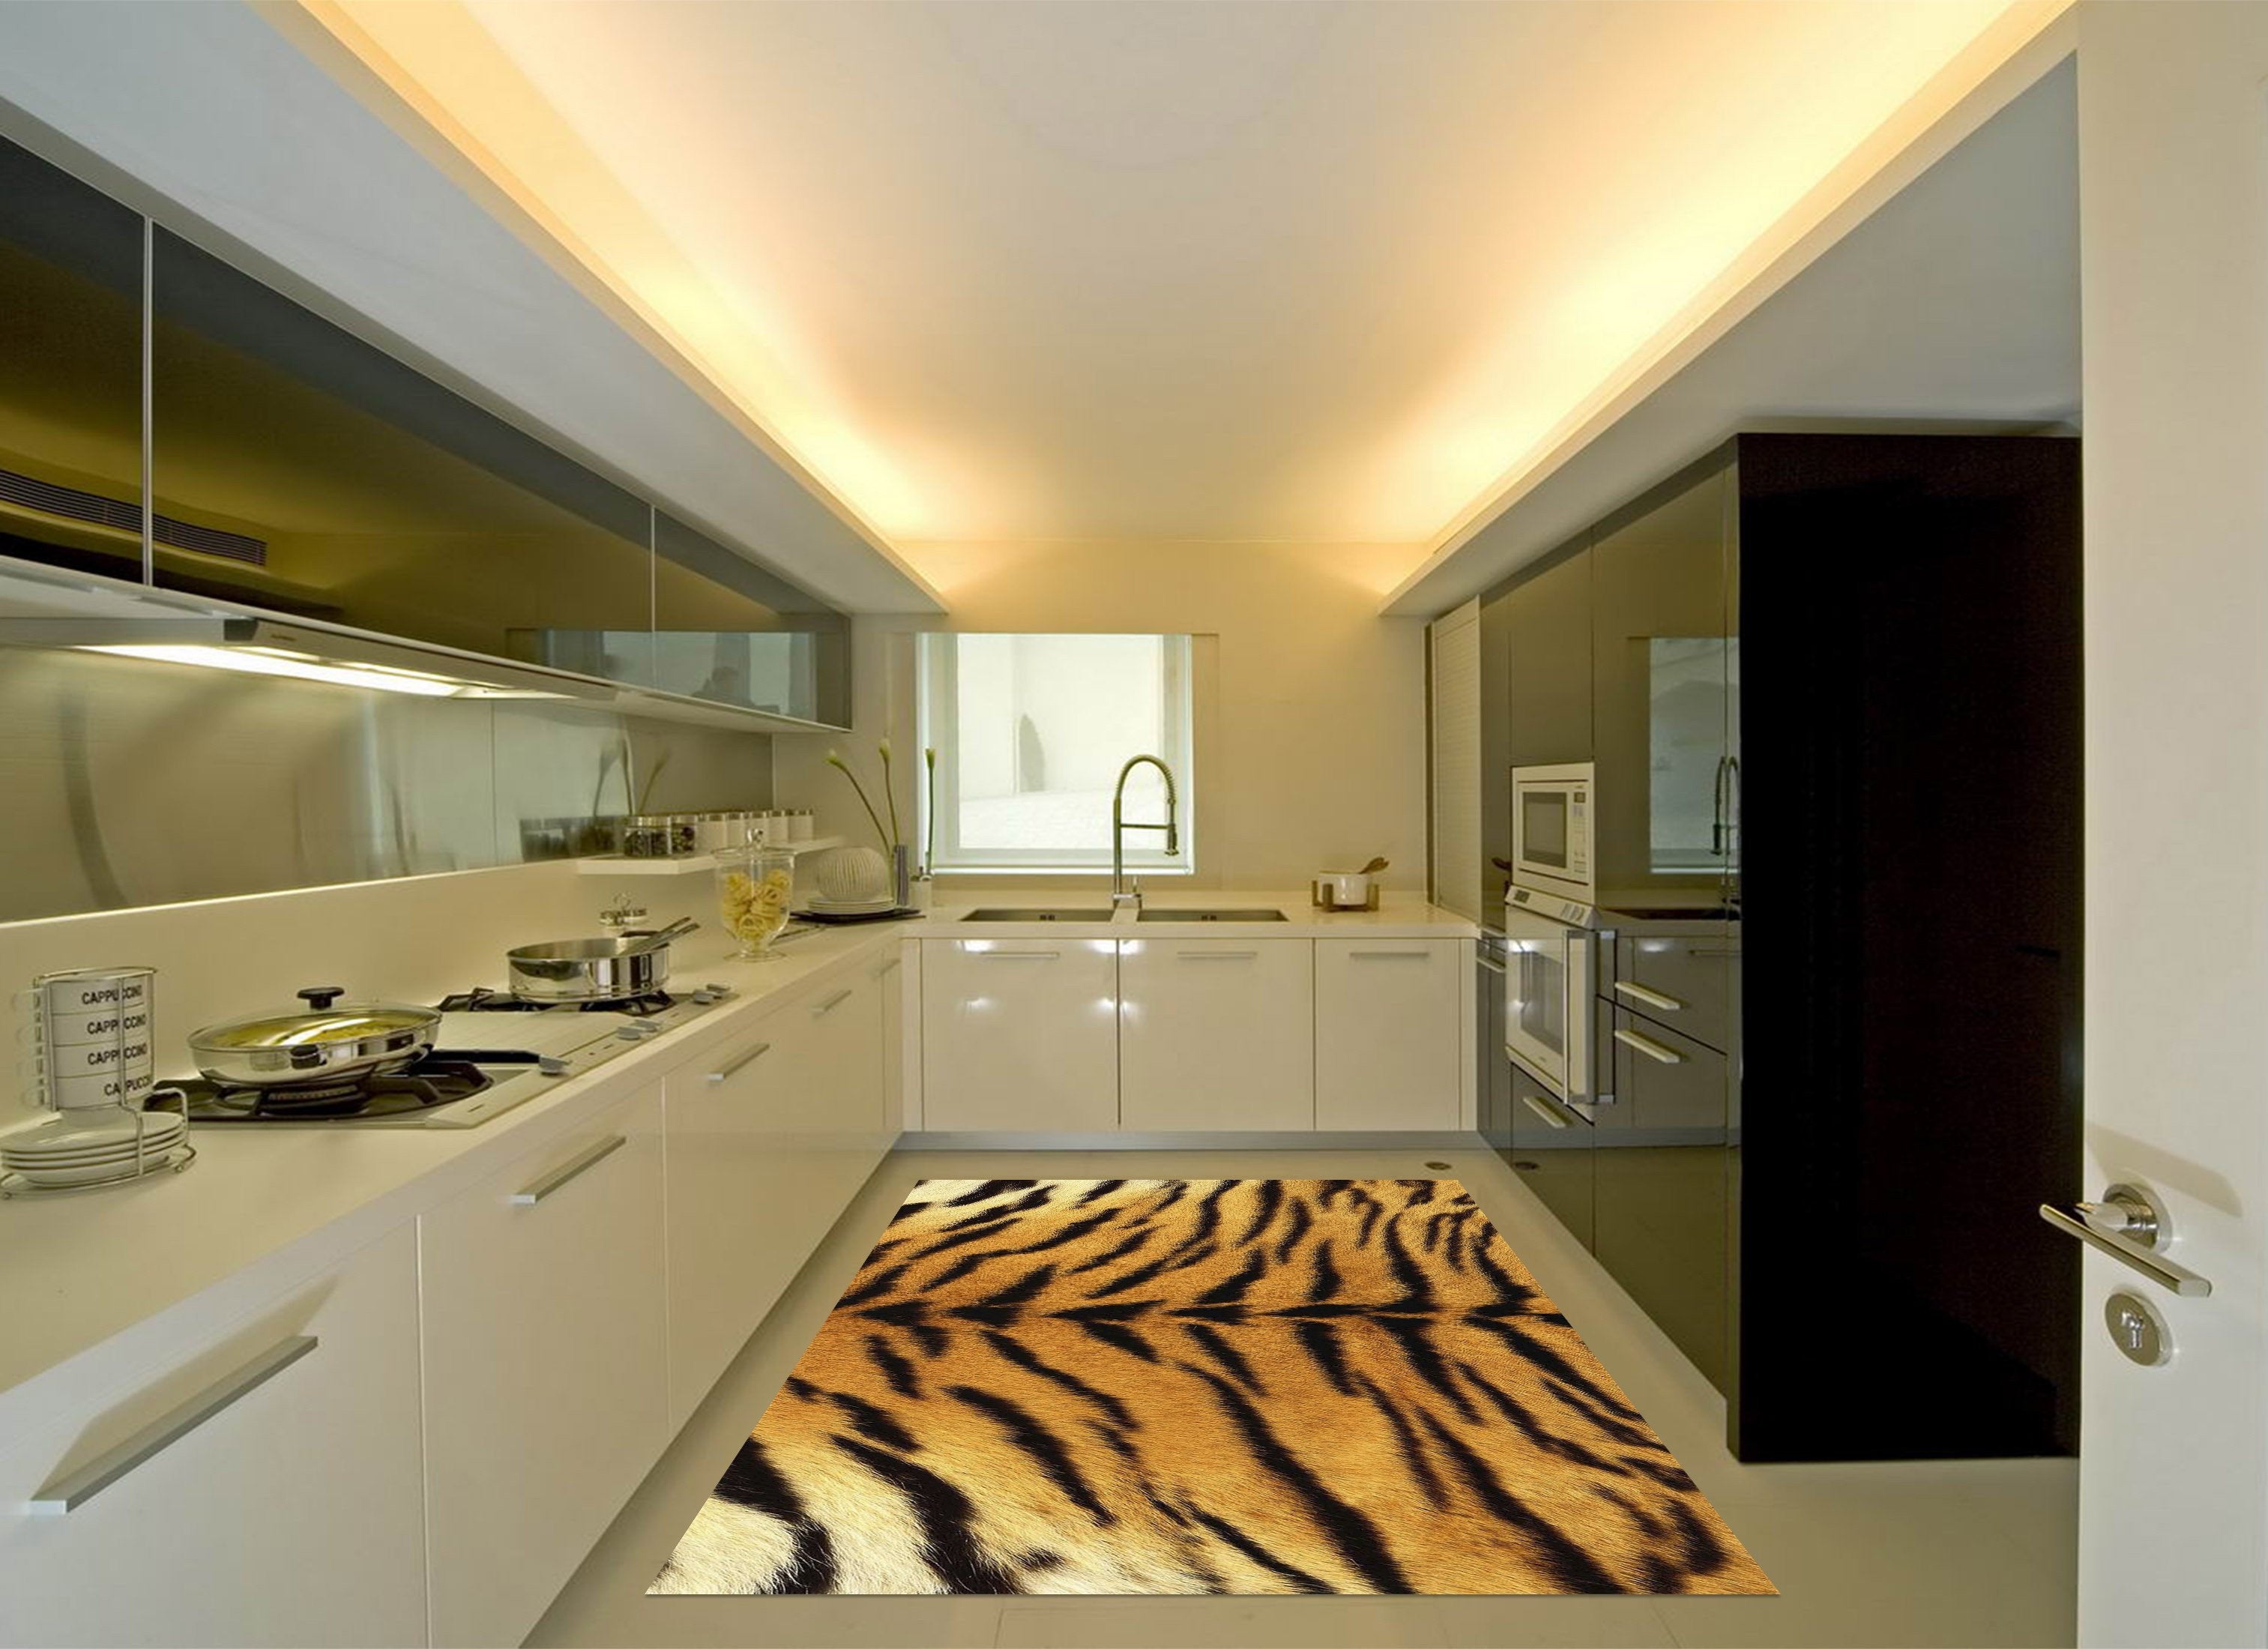 3D Tiger Fur Pattern Kitchen Mat Floor Mural Wallpaper AJ Wallpaper 